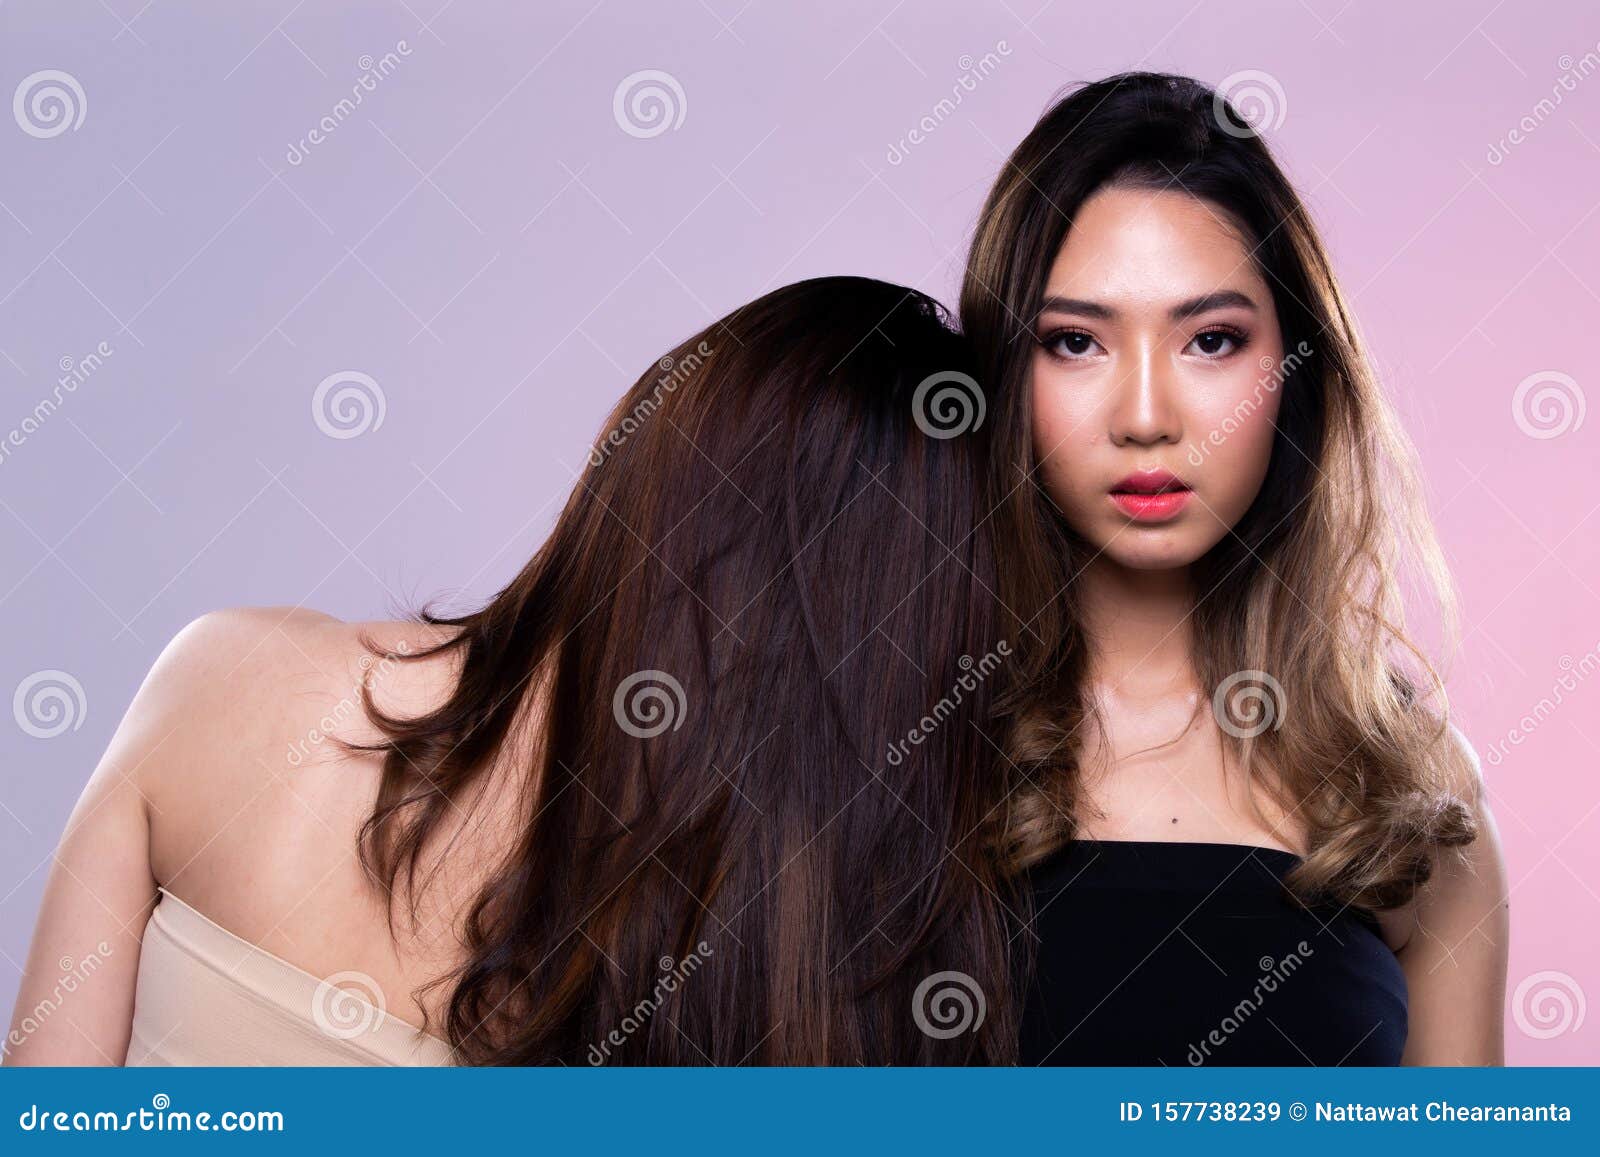 Fashion Asian Woman Tan Skin Black Hair Beautiful Stock Image